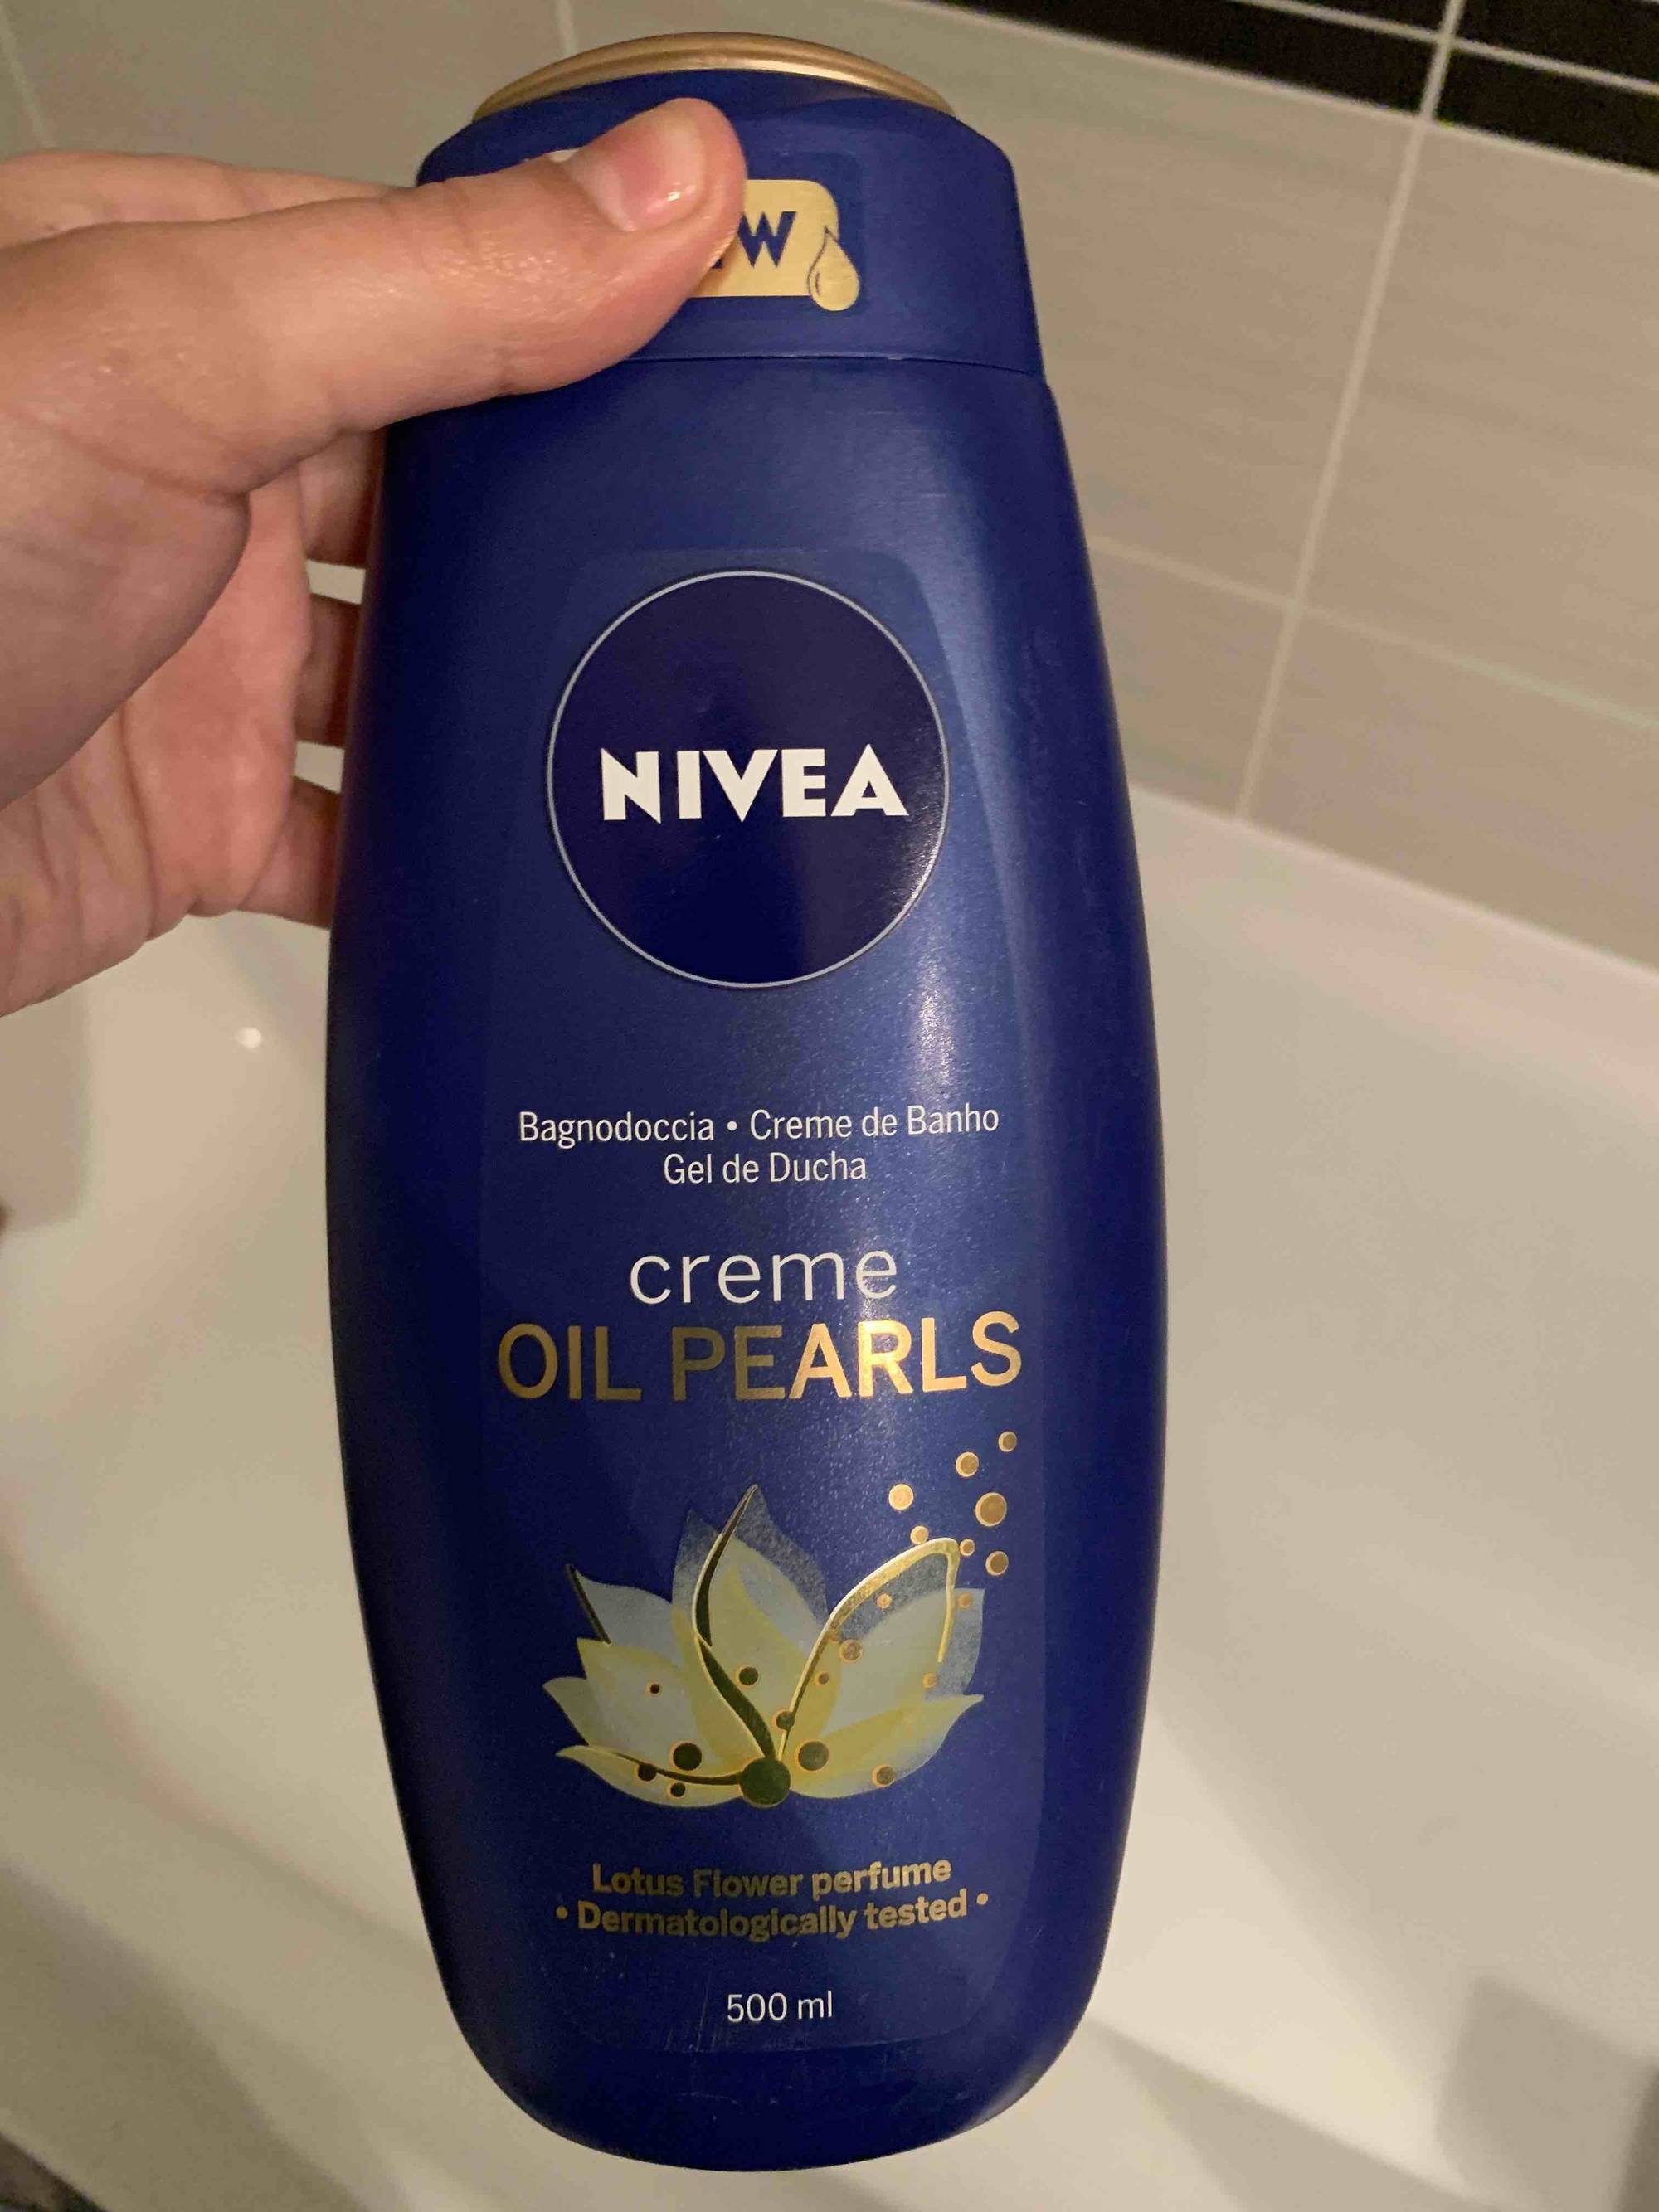 NIVEA - Oil pearls - Creme de banho gel de ducha